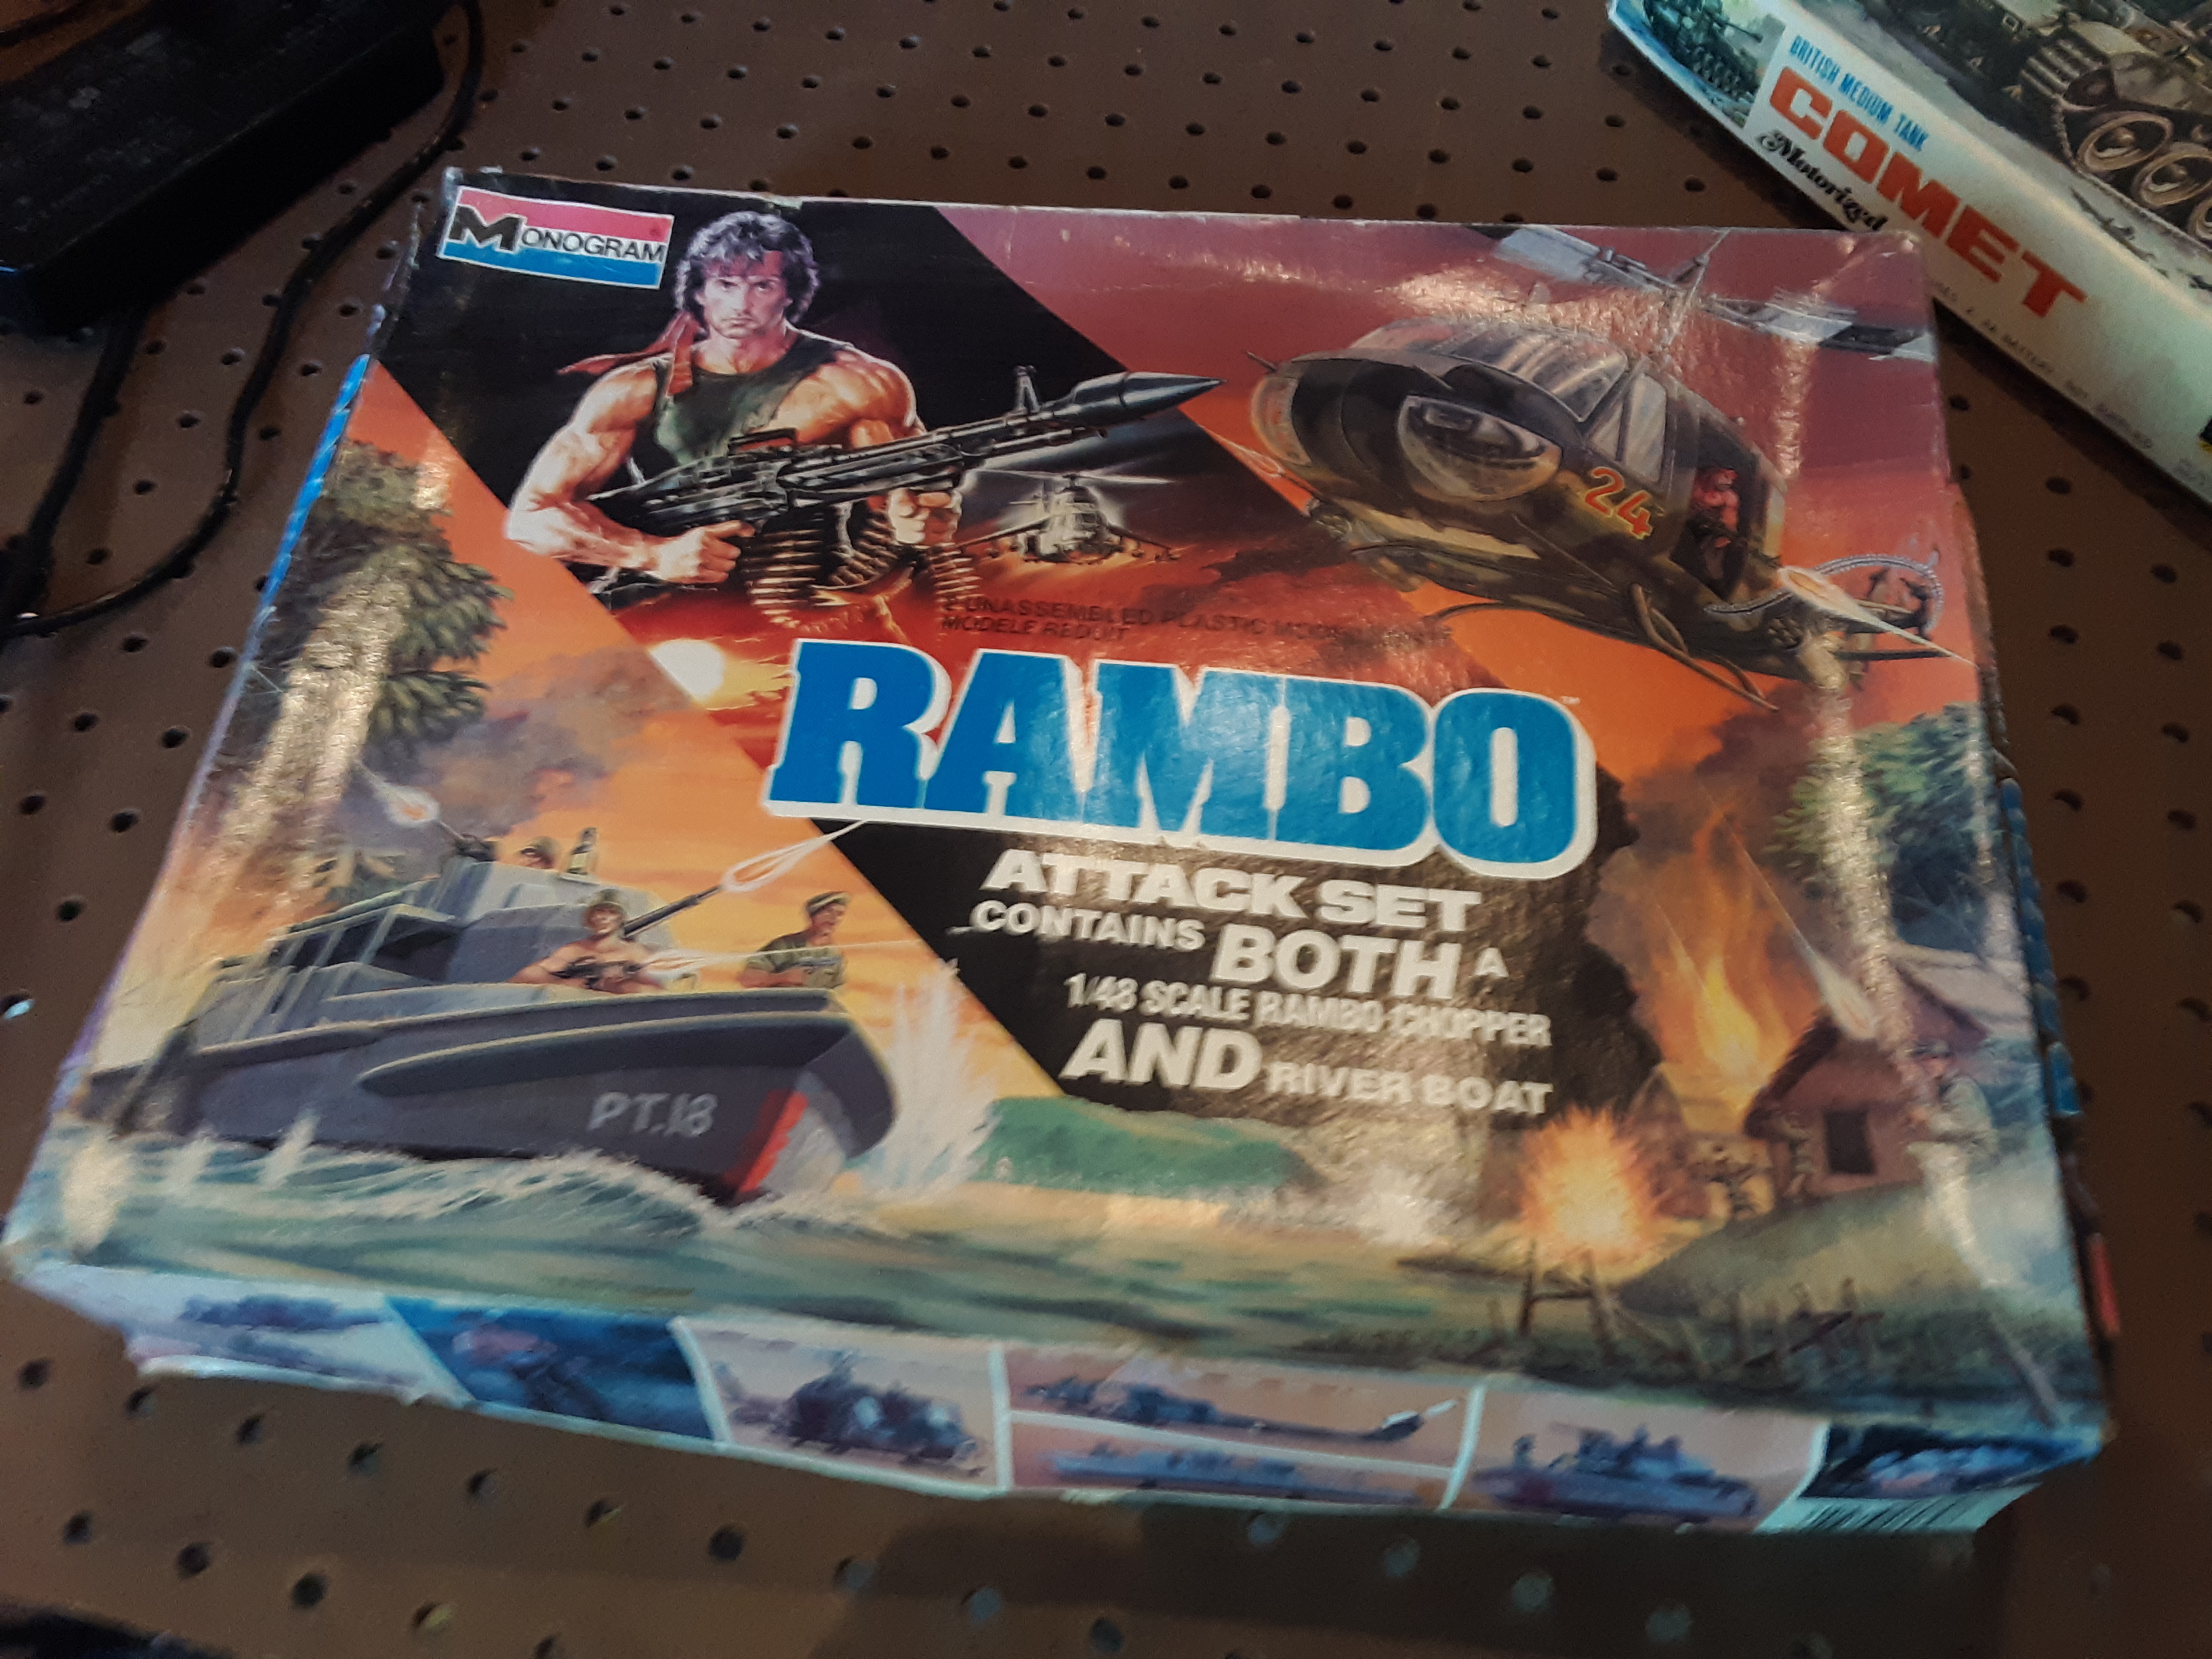 Item: Monogram Rambo Attack Set